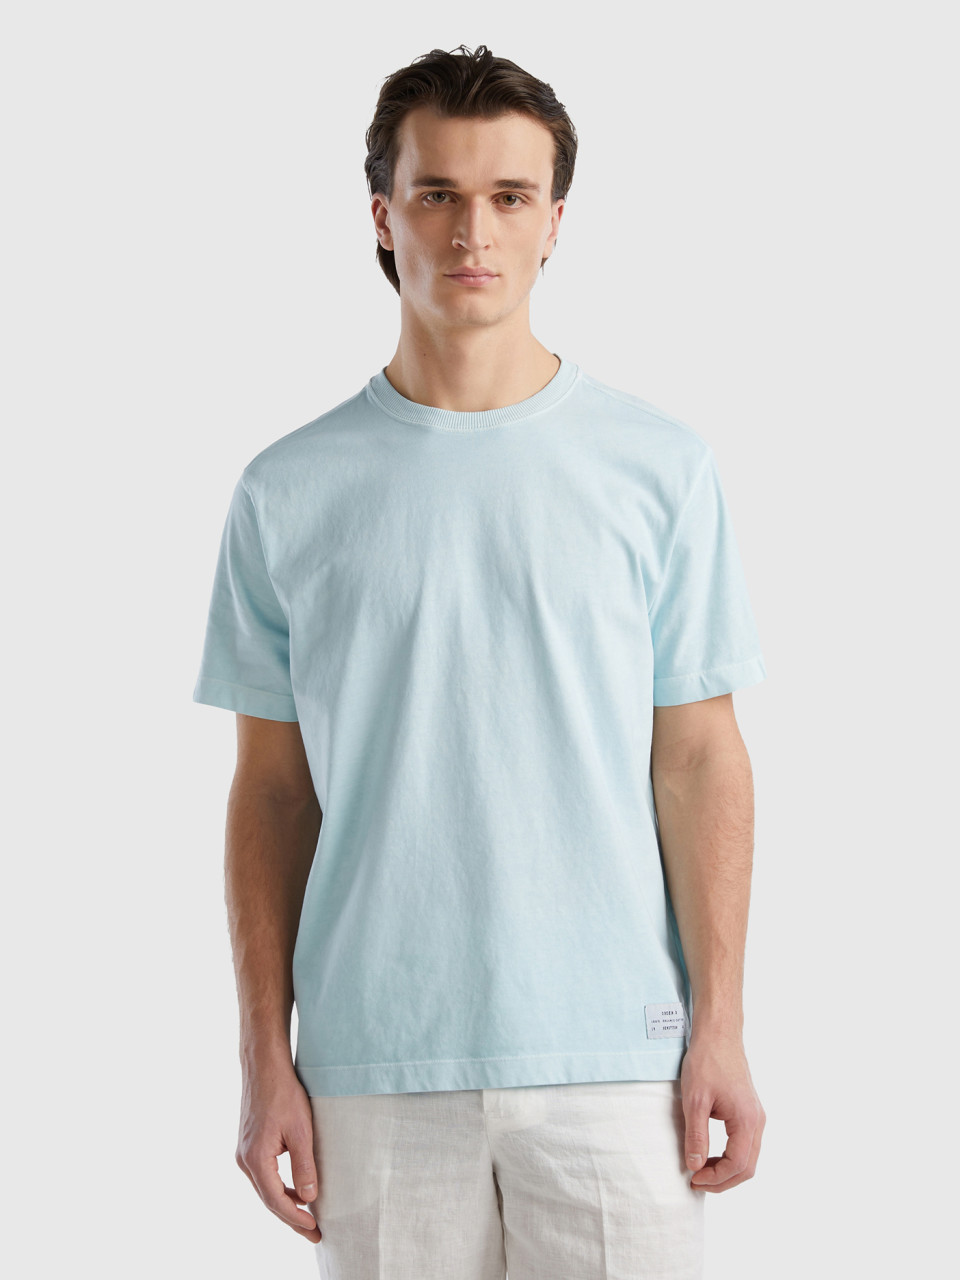 Benetton, 100% Organic Cotton Crew Neck T-shirt, Aqua, Men